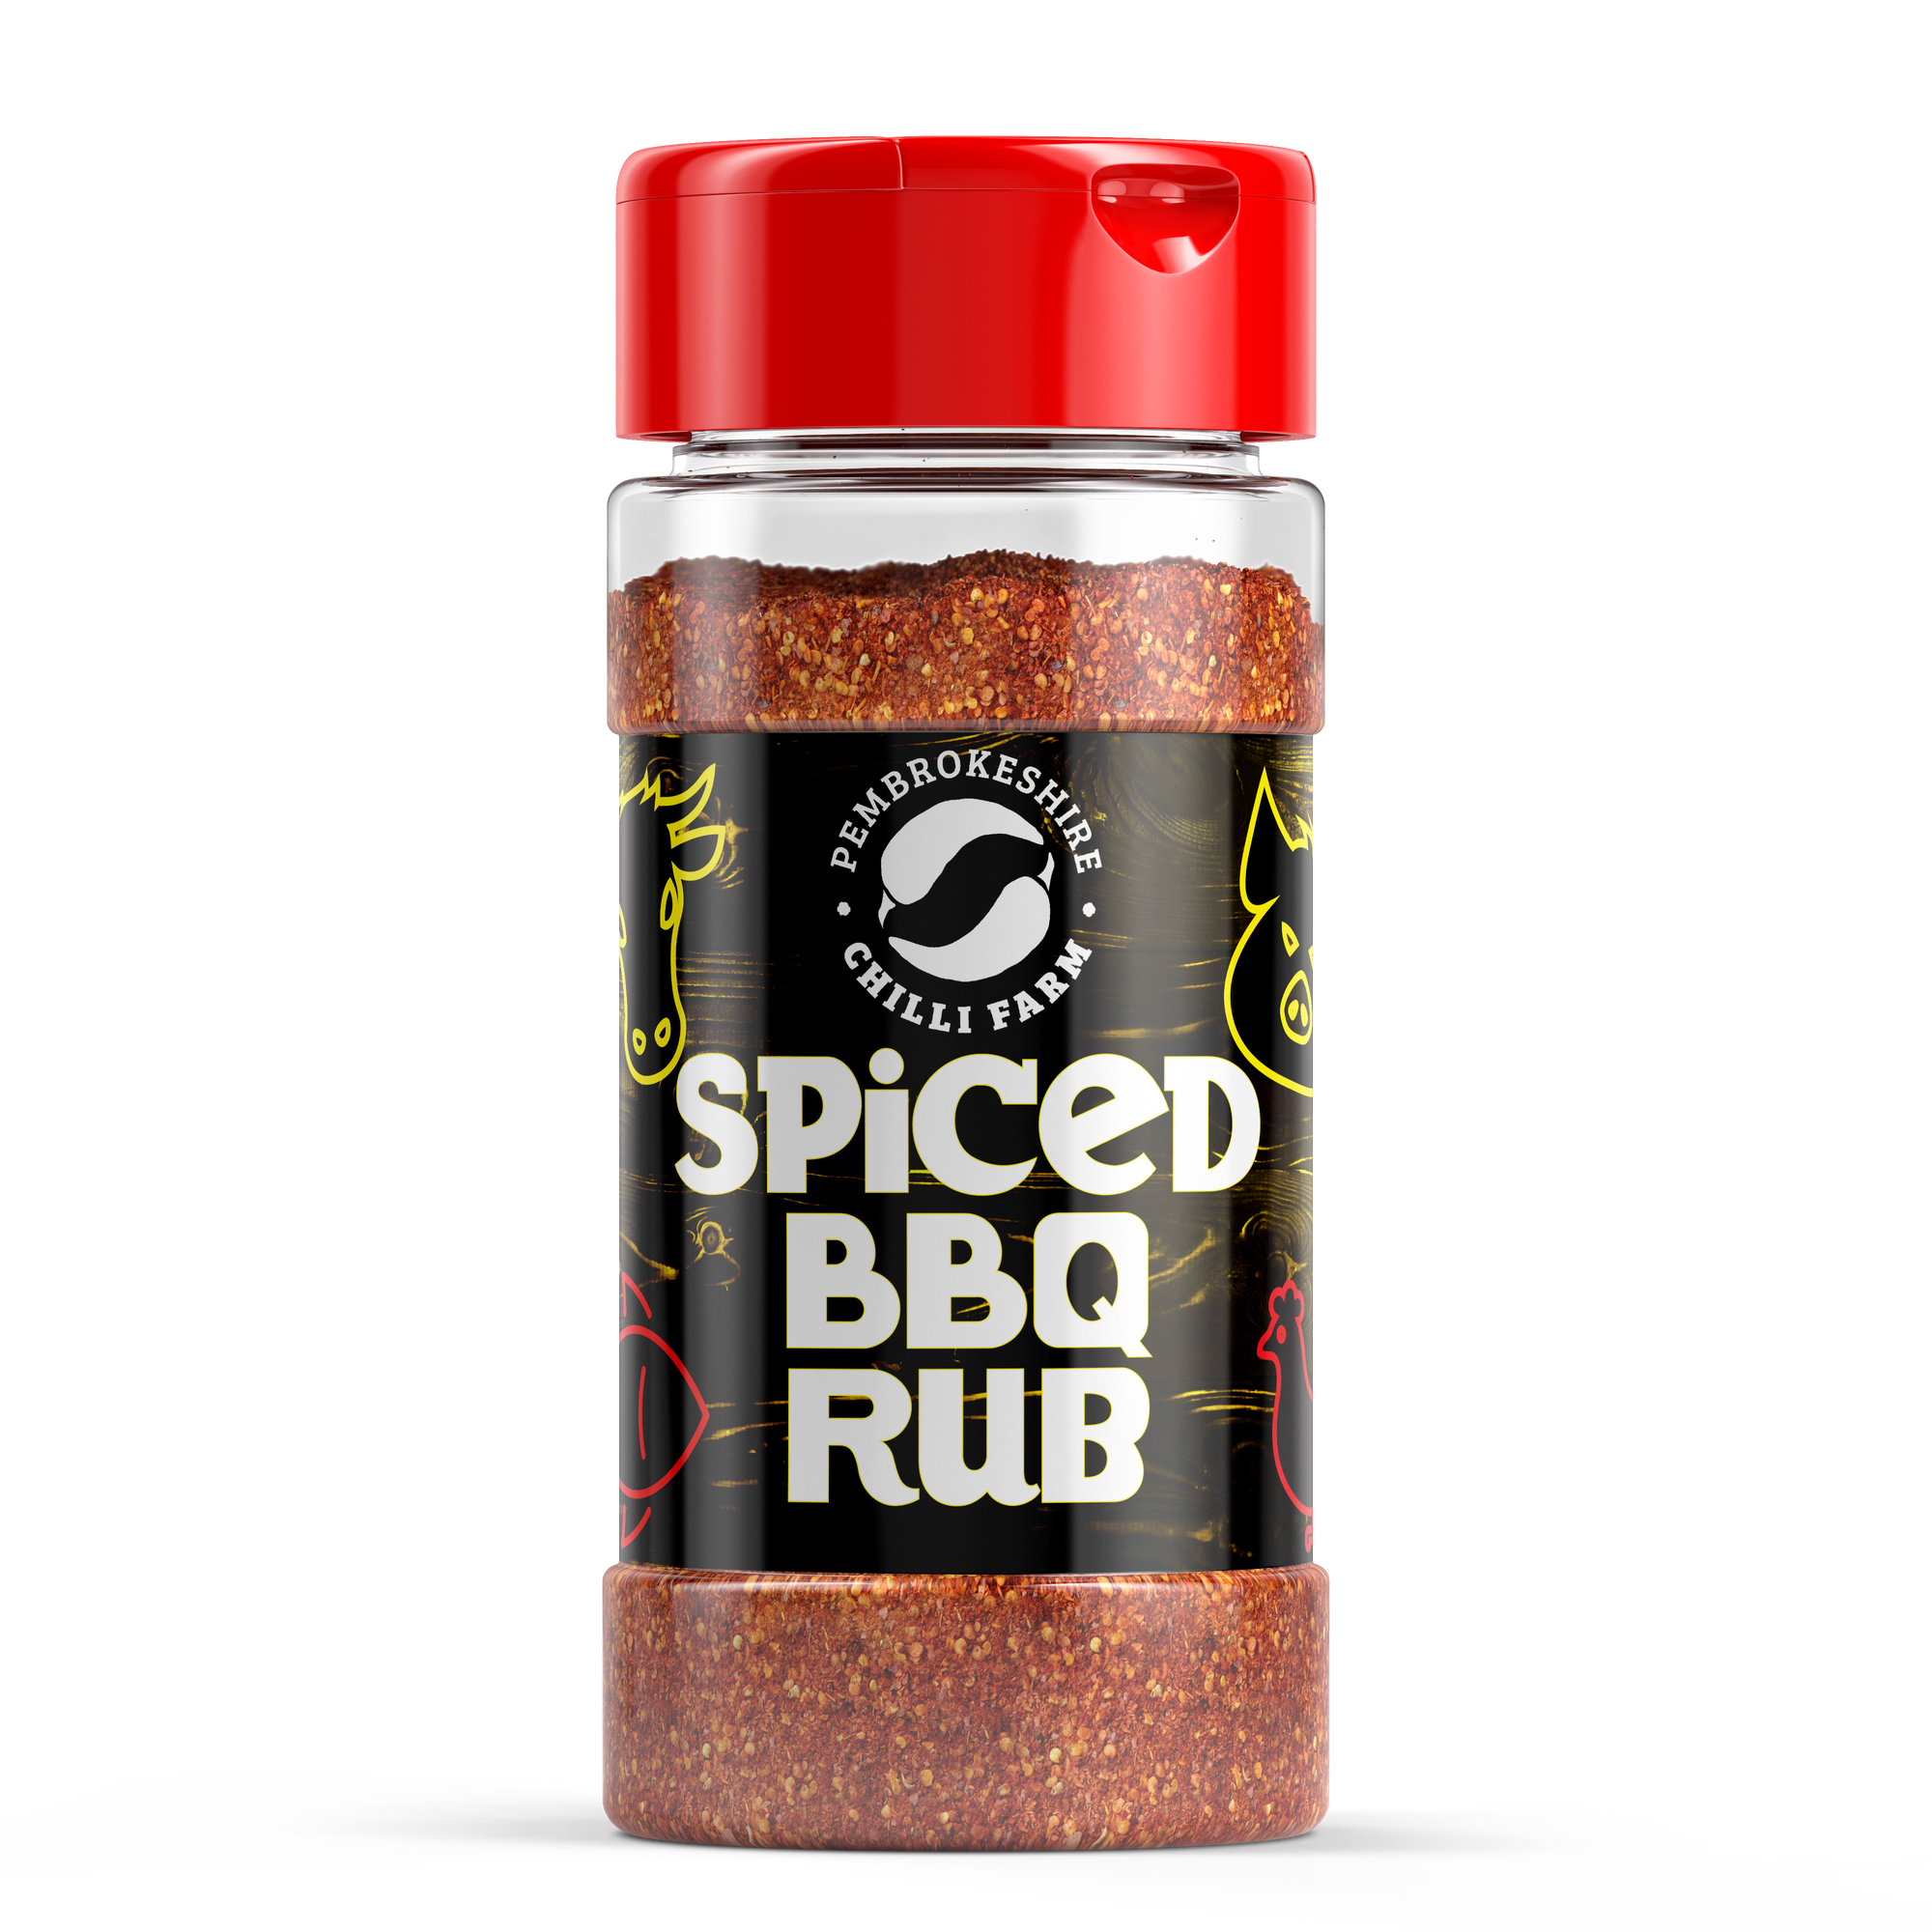 Pembrokeshire Chilli Farm Spiced BBQ Rub (160g)